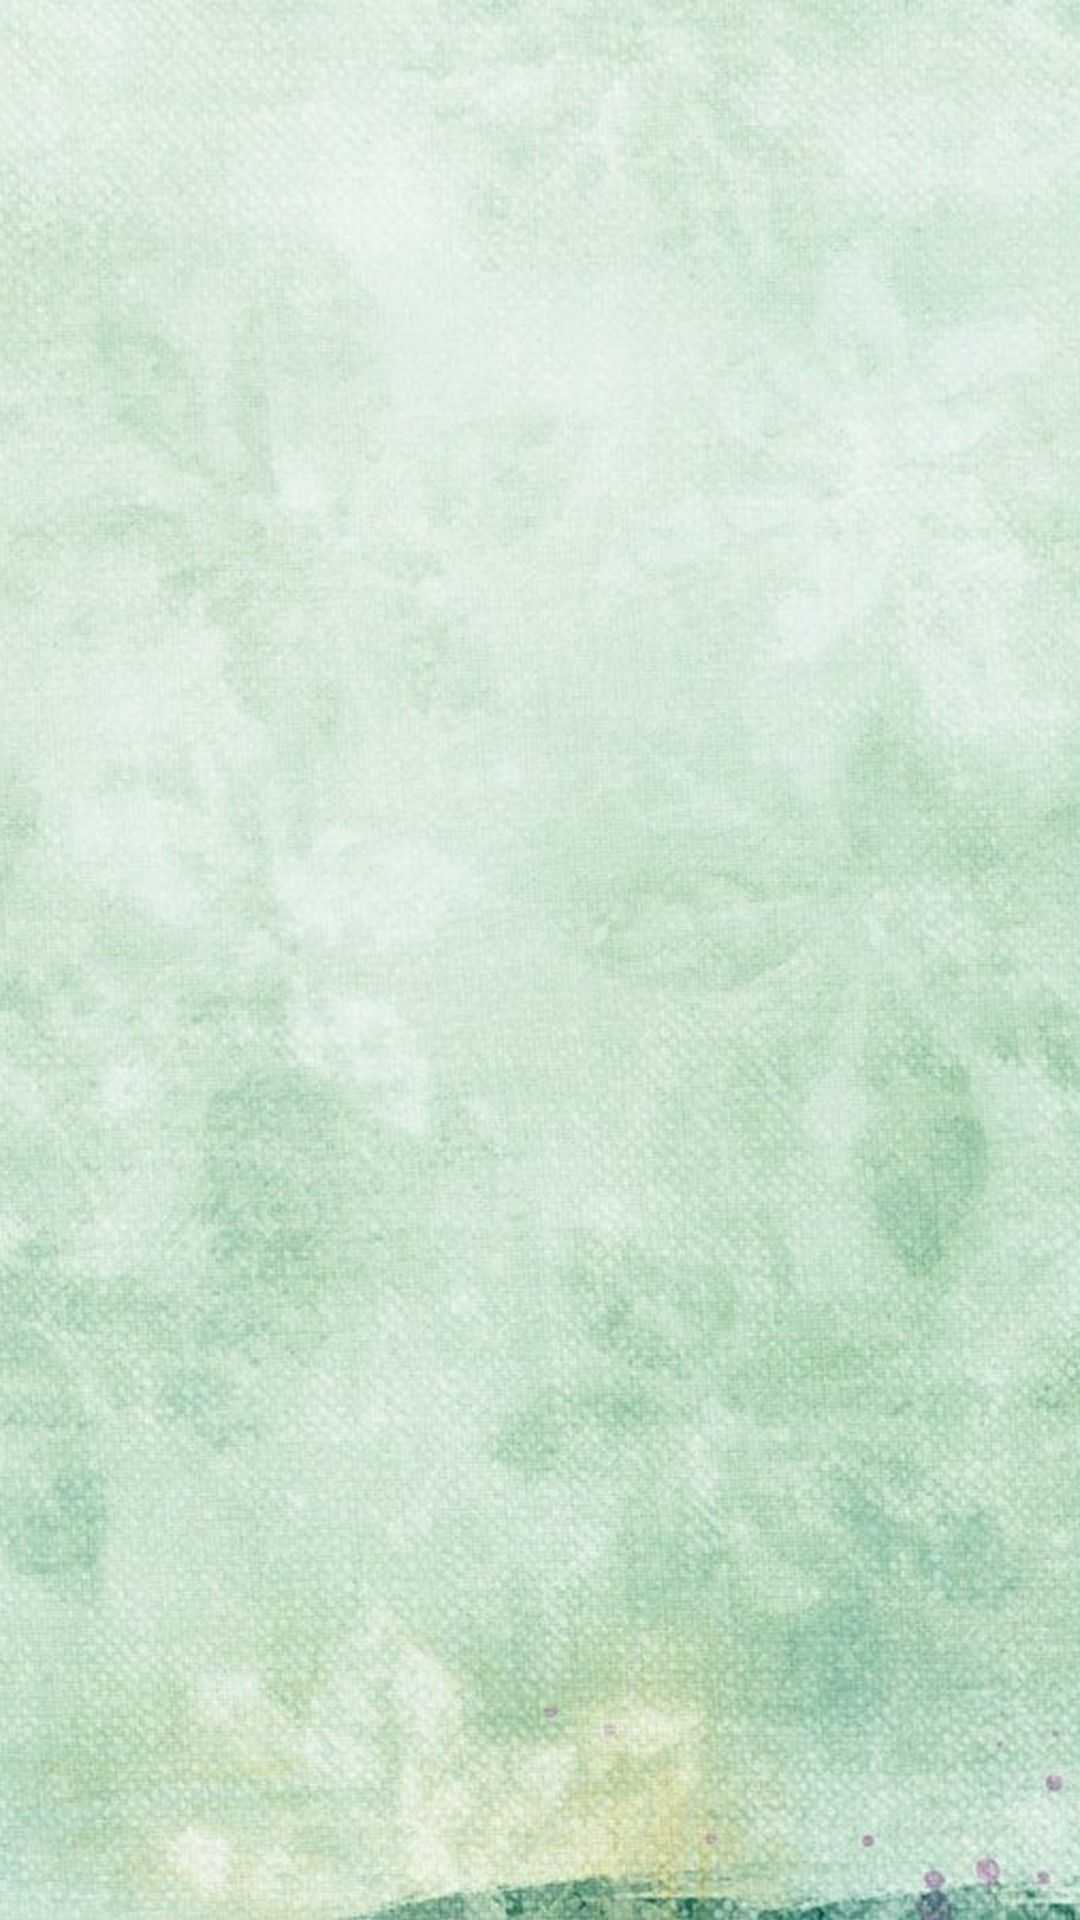 Sage Green Aesthetic Wallpaper - KoLPaPer - Awesome Free HD Wallpapers